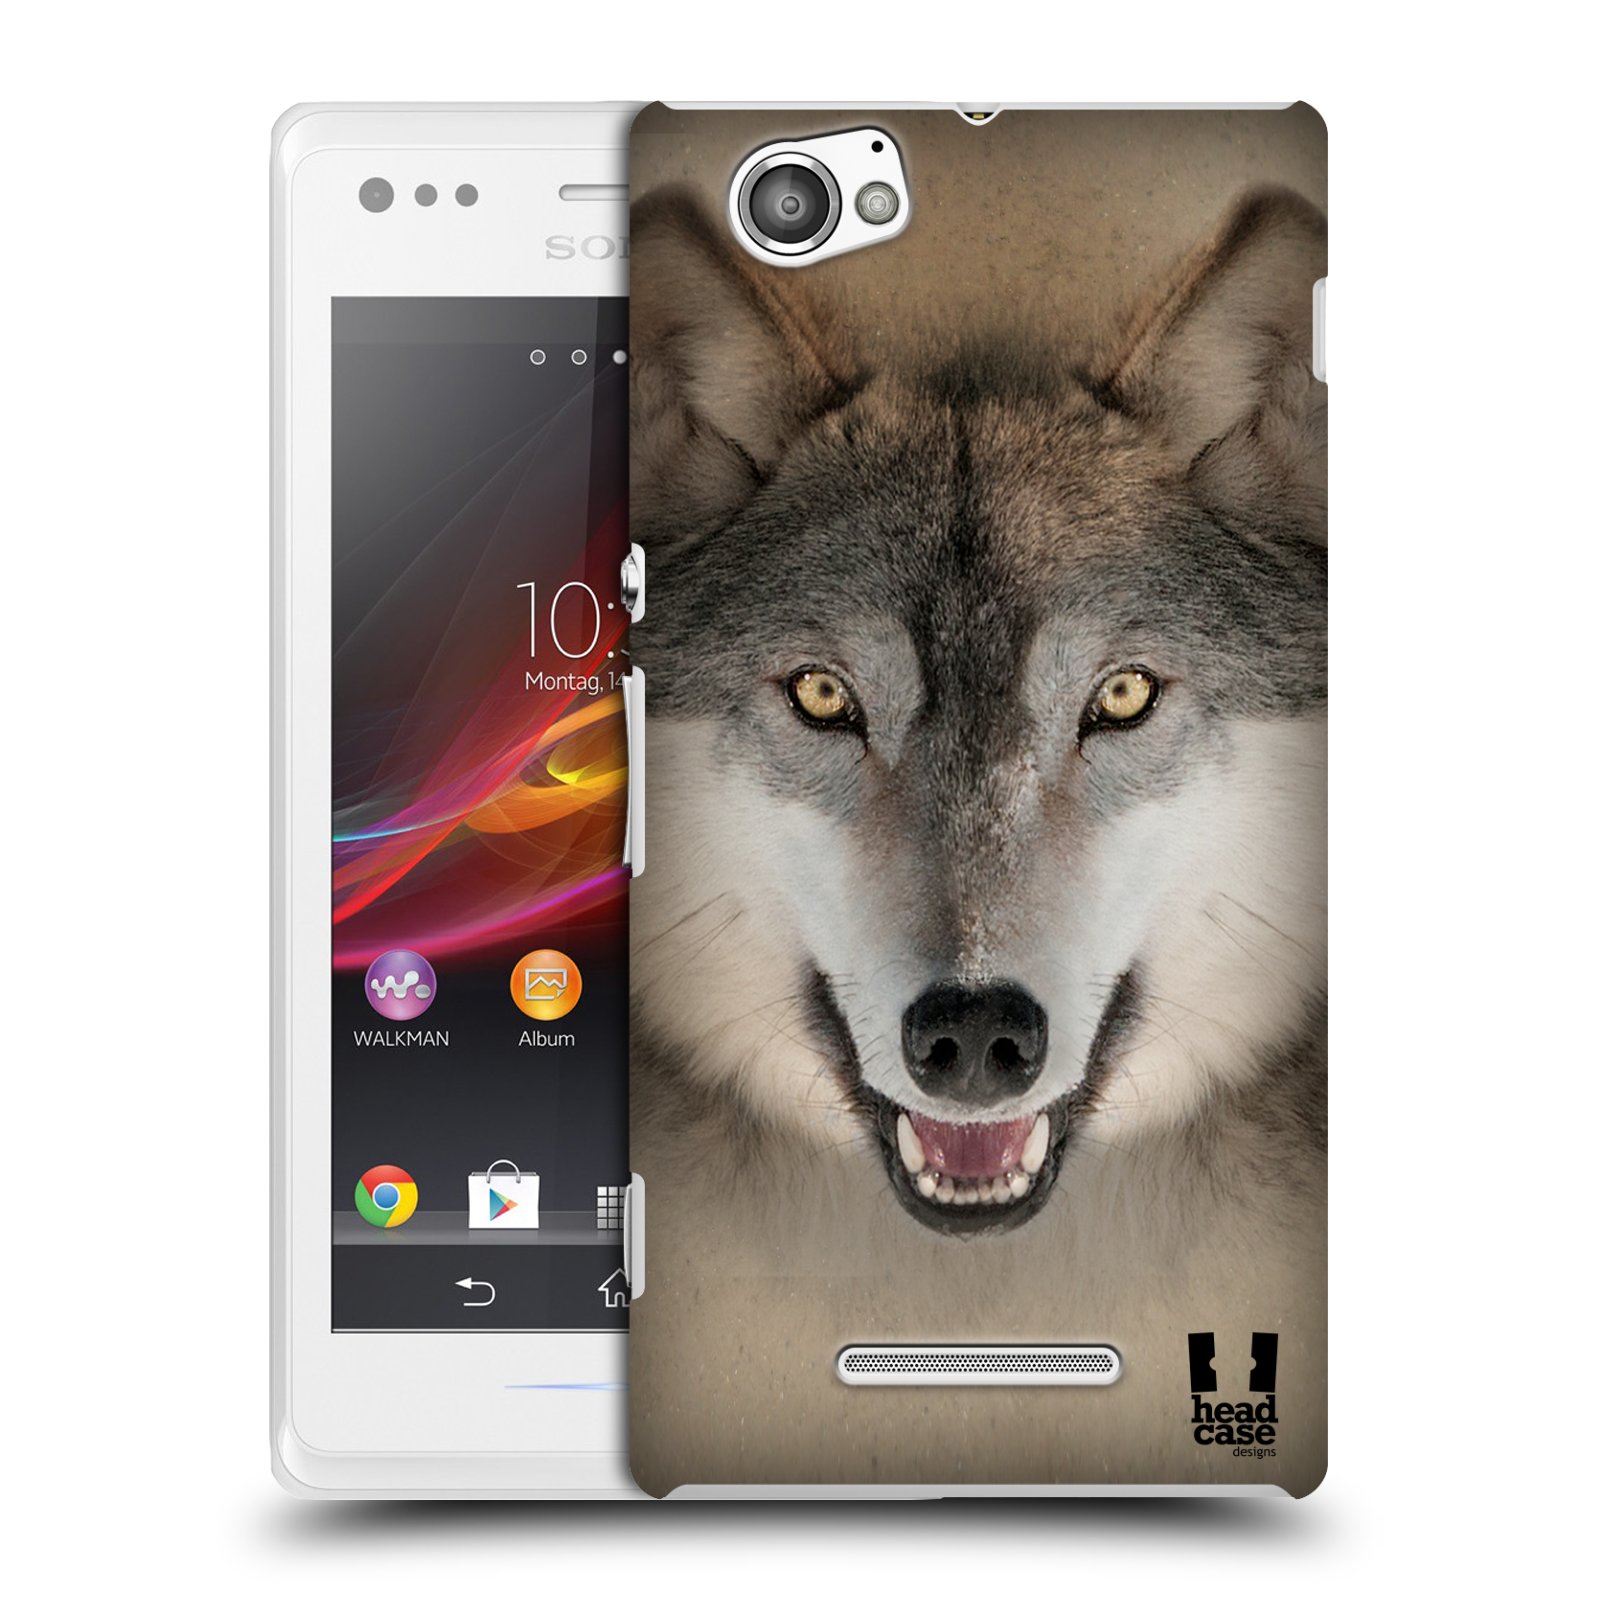 HEAD CASE plastový obal na mobil Sony Xperia M vzor Zvířecí tváře 2 vlk šedý